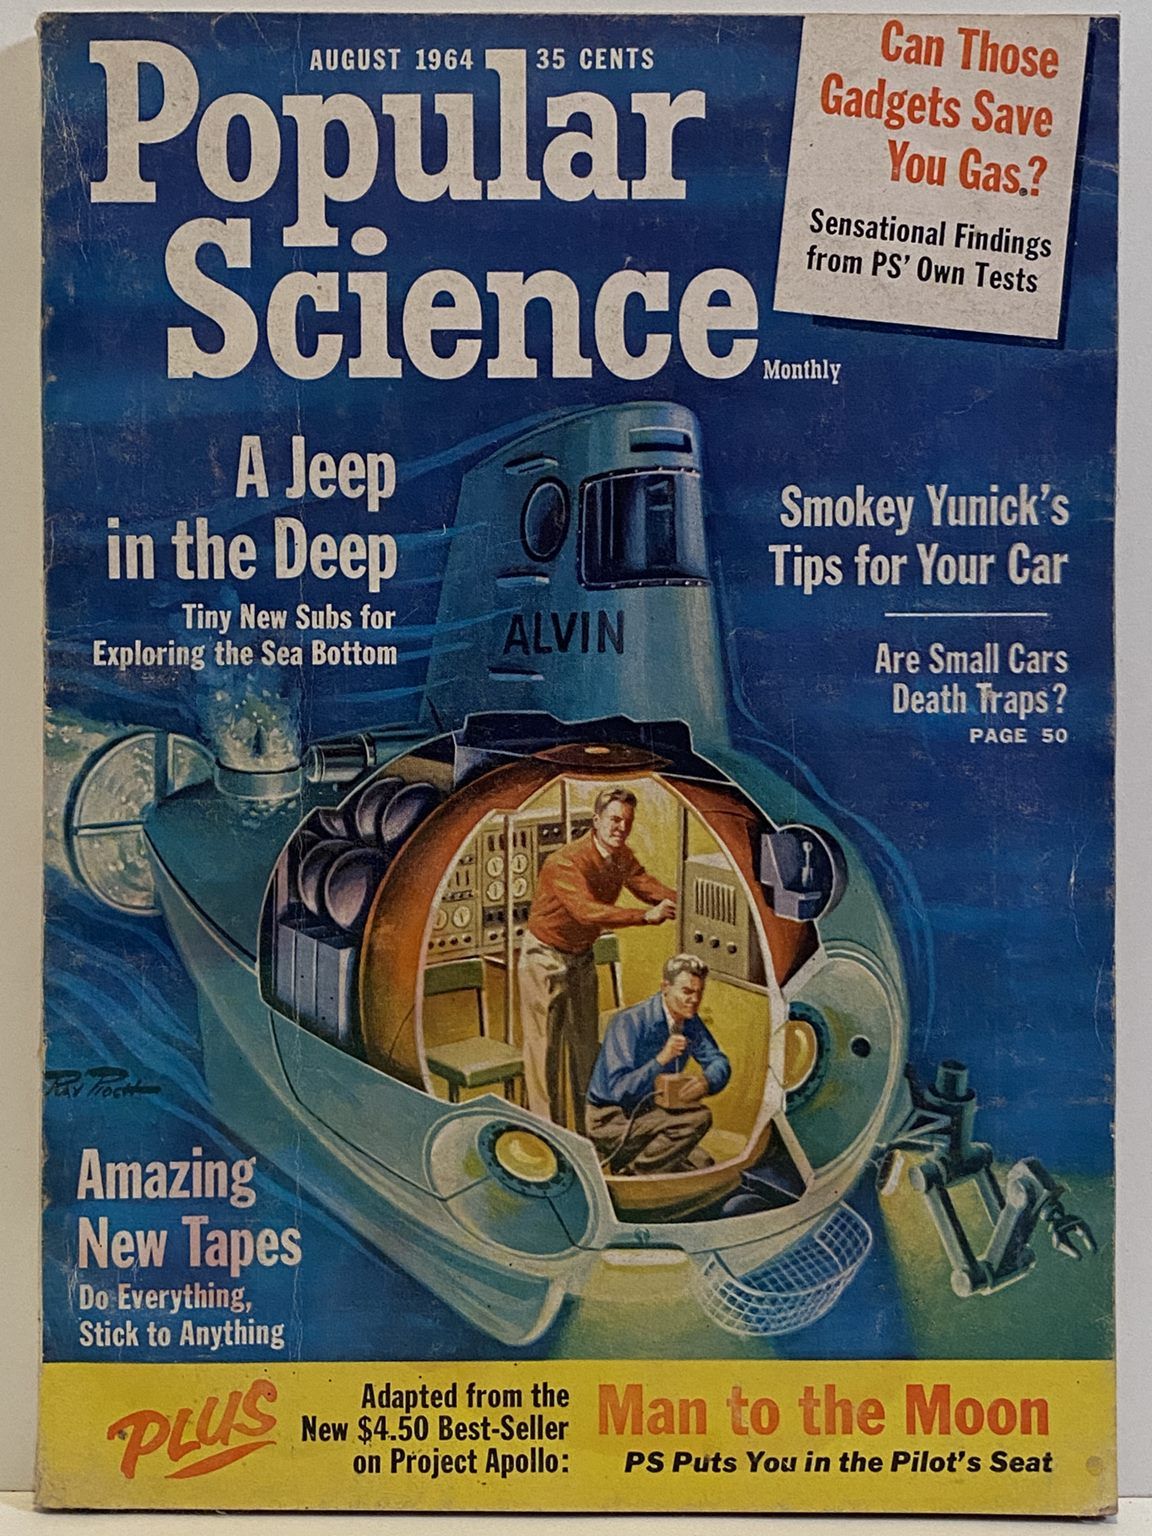 VINTAGE MAGAZINE: Popular Science, Vol. 185, No. 2 - August 1964